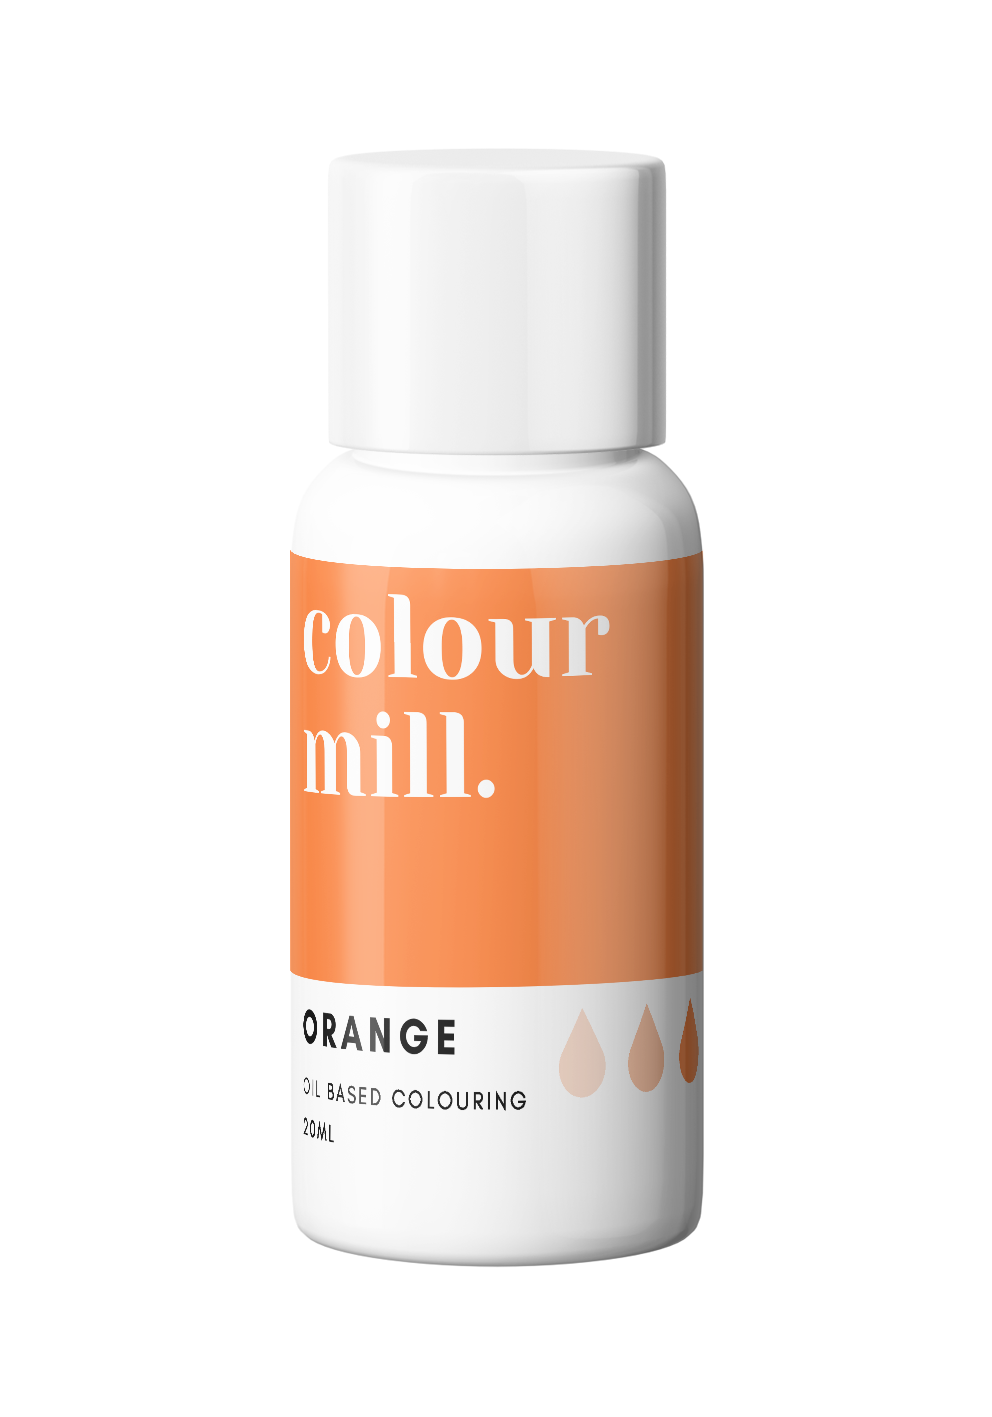 Colour Mill Orange